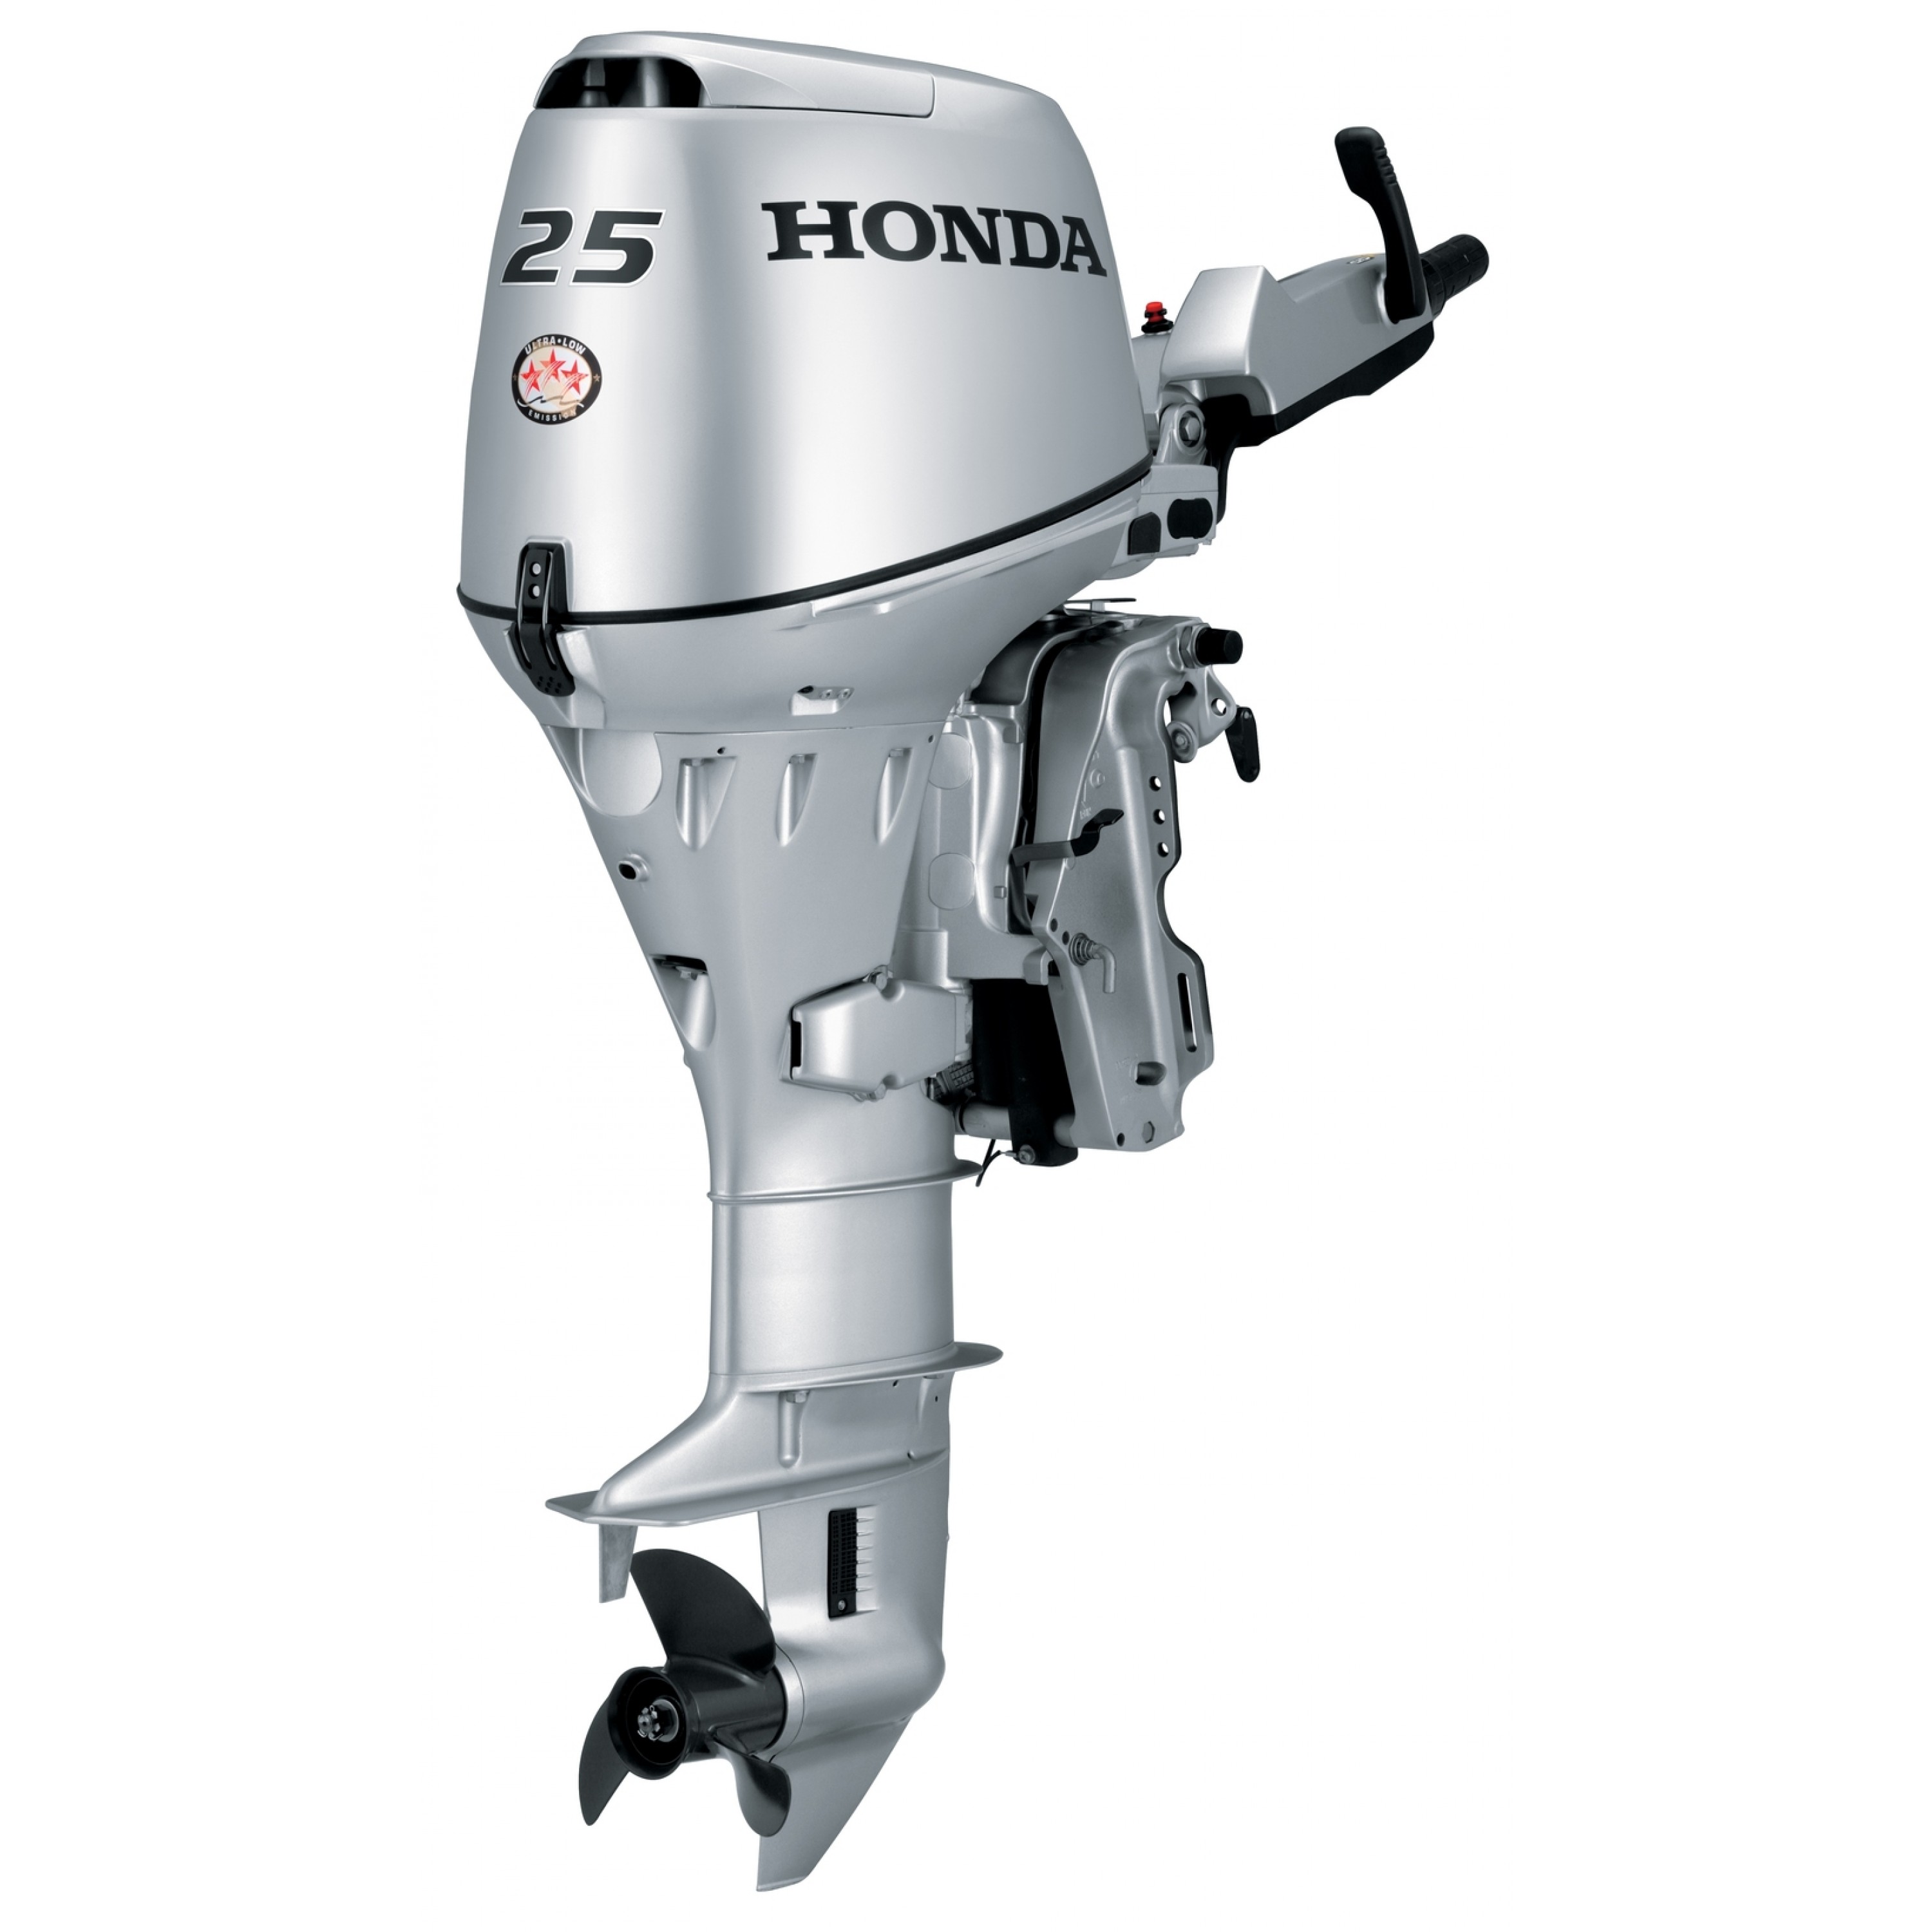 25 HP Honda Outboard Motor, BF25DK3SHGC